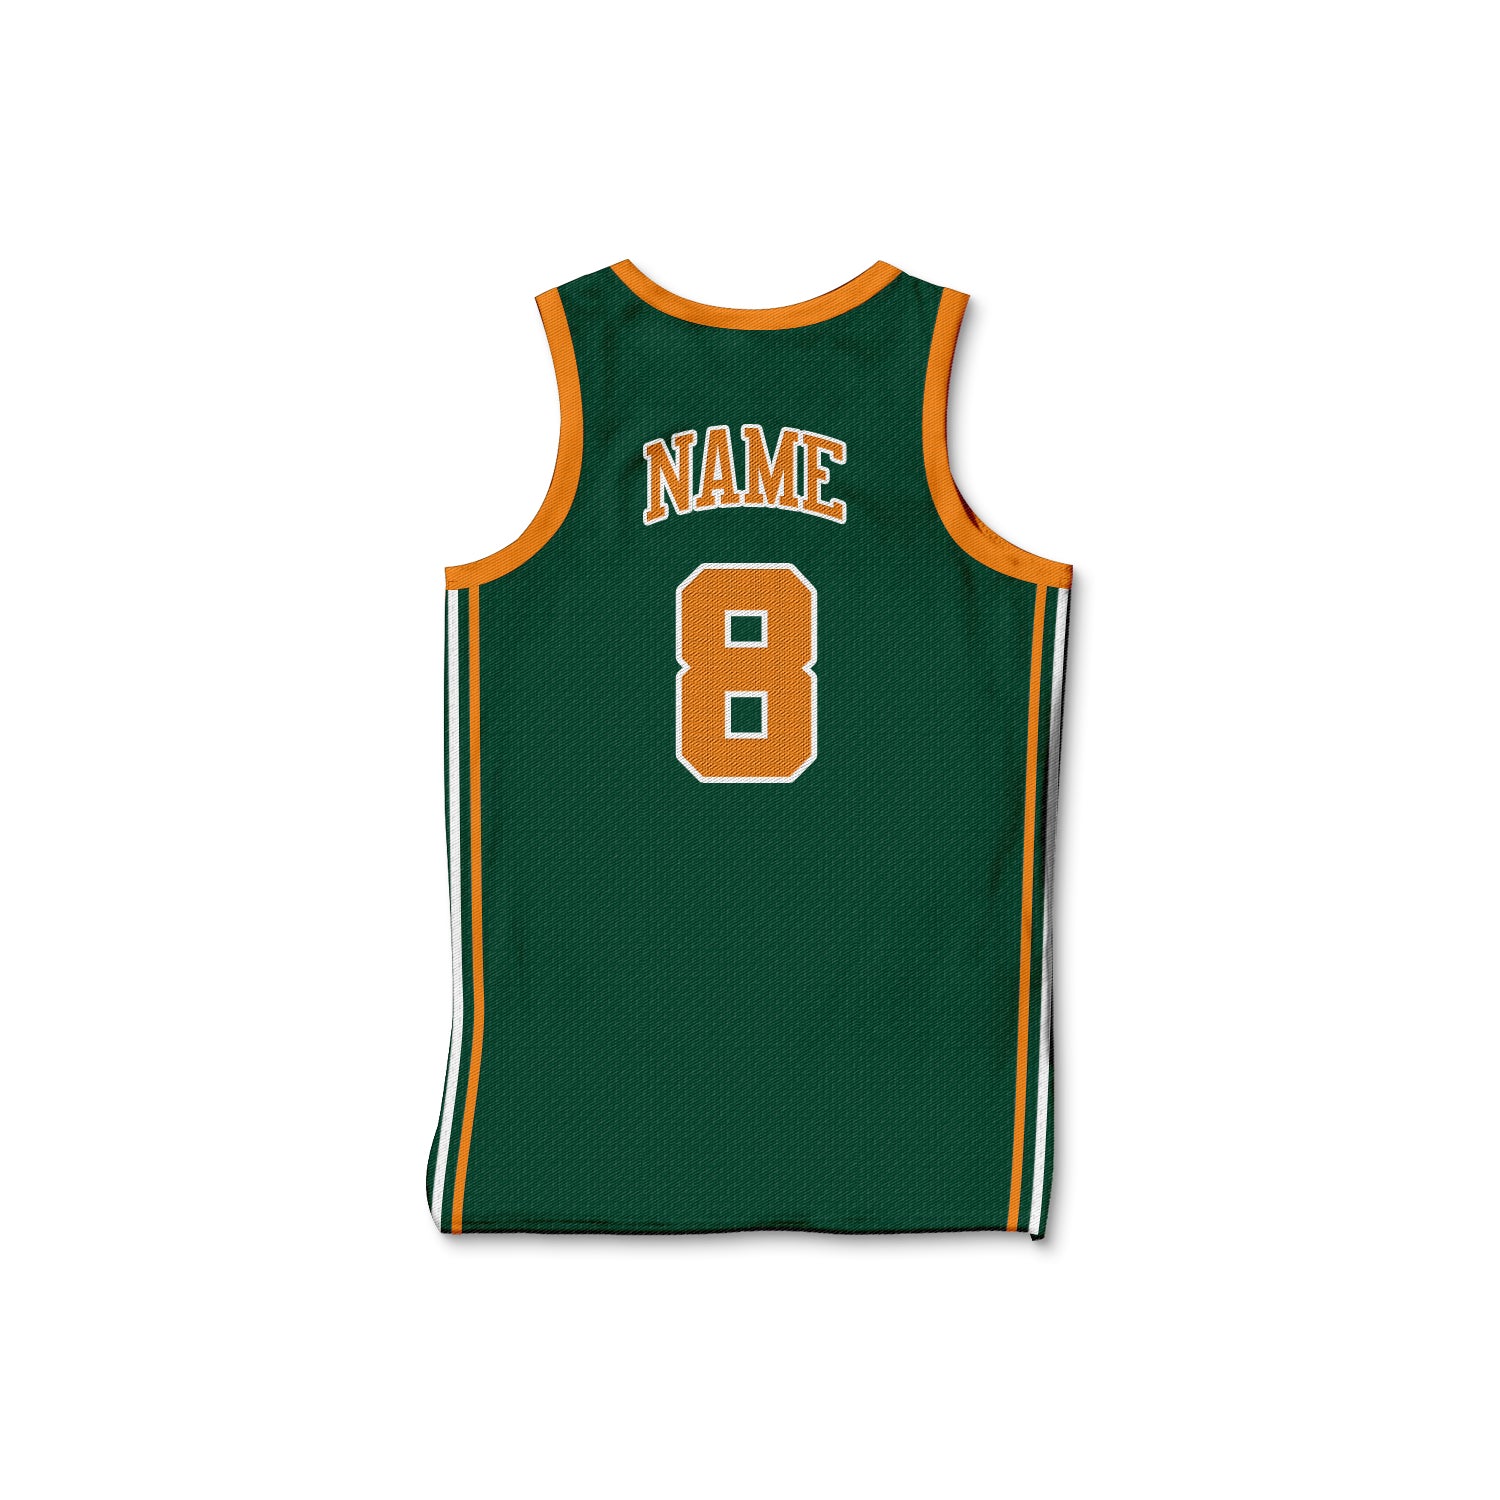 Customizable "Hawkins" Groomsmen Basketball Jersey - Green